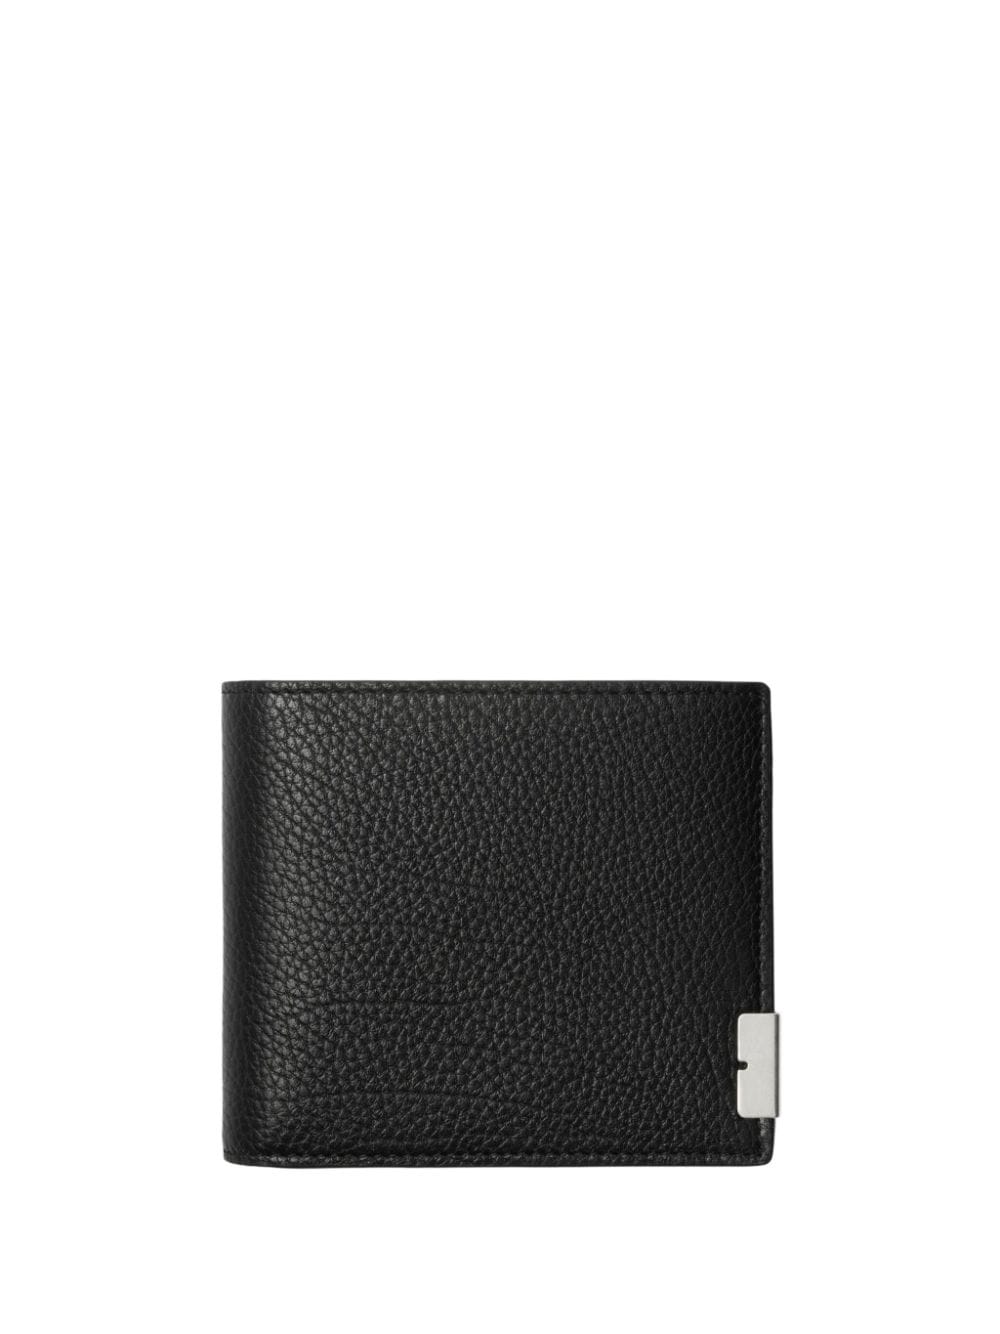 Burberry B-cut leather wallet - Black von Burberry